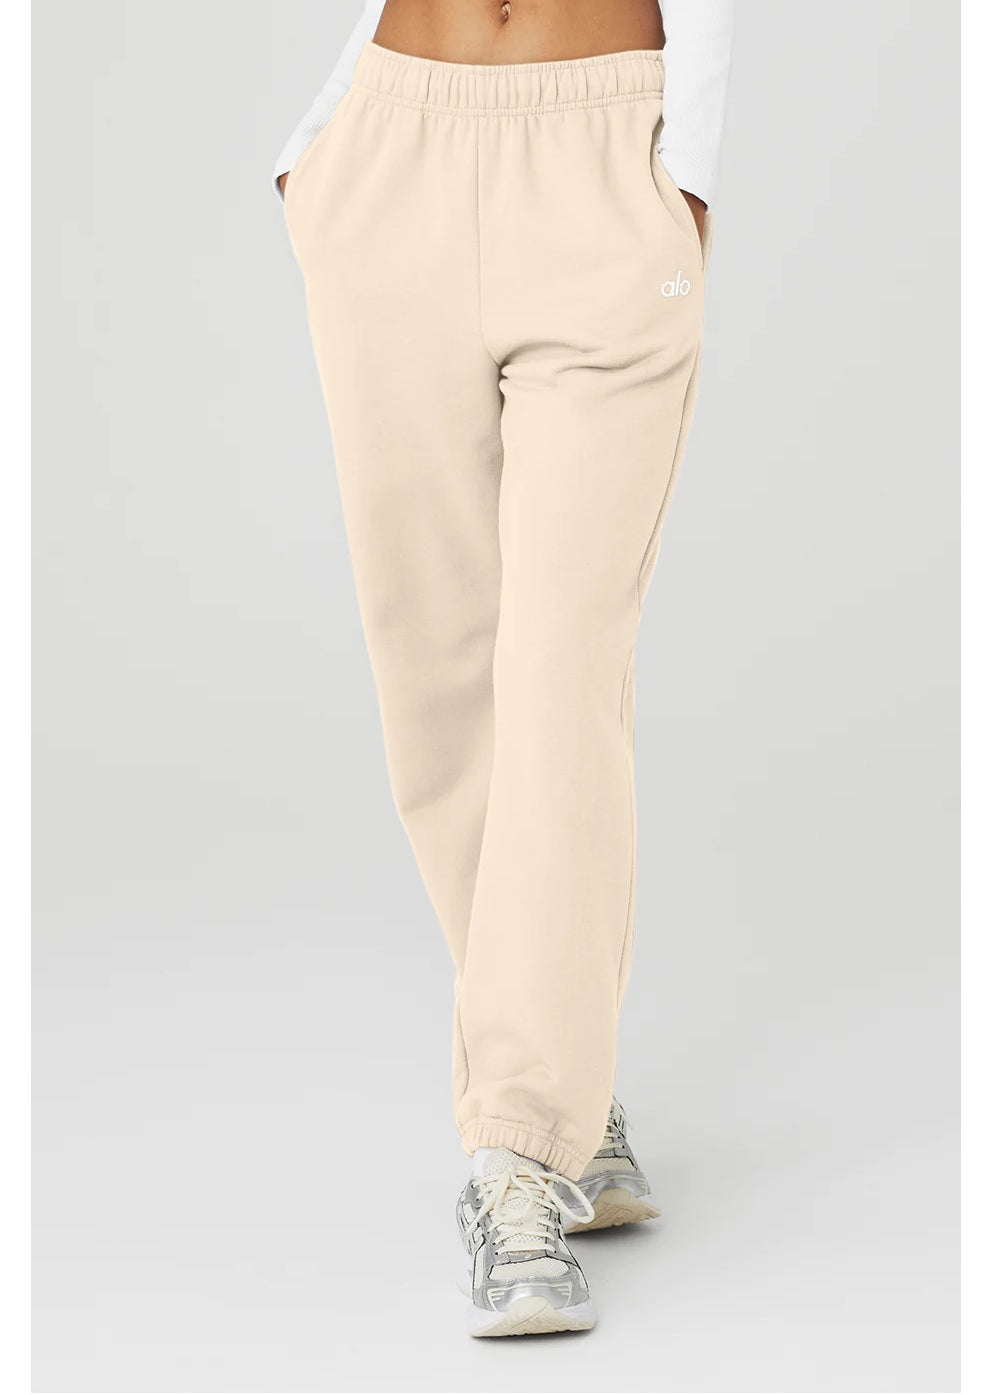 Sell Alo Yoga Accolade Sweatpants - White